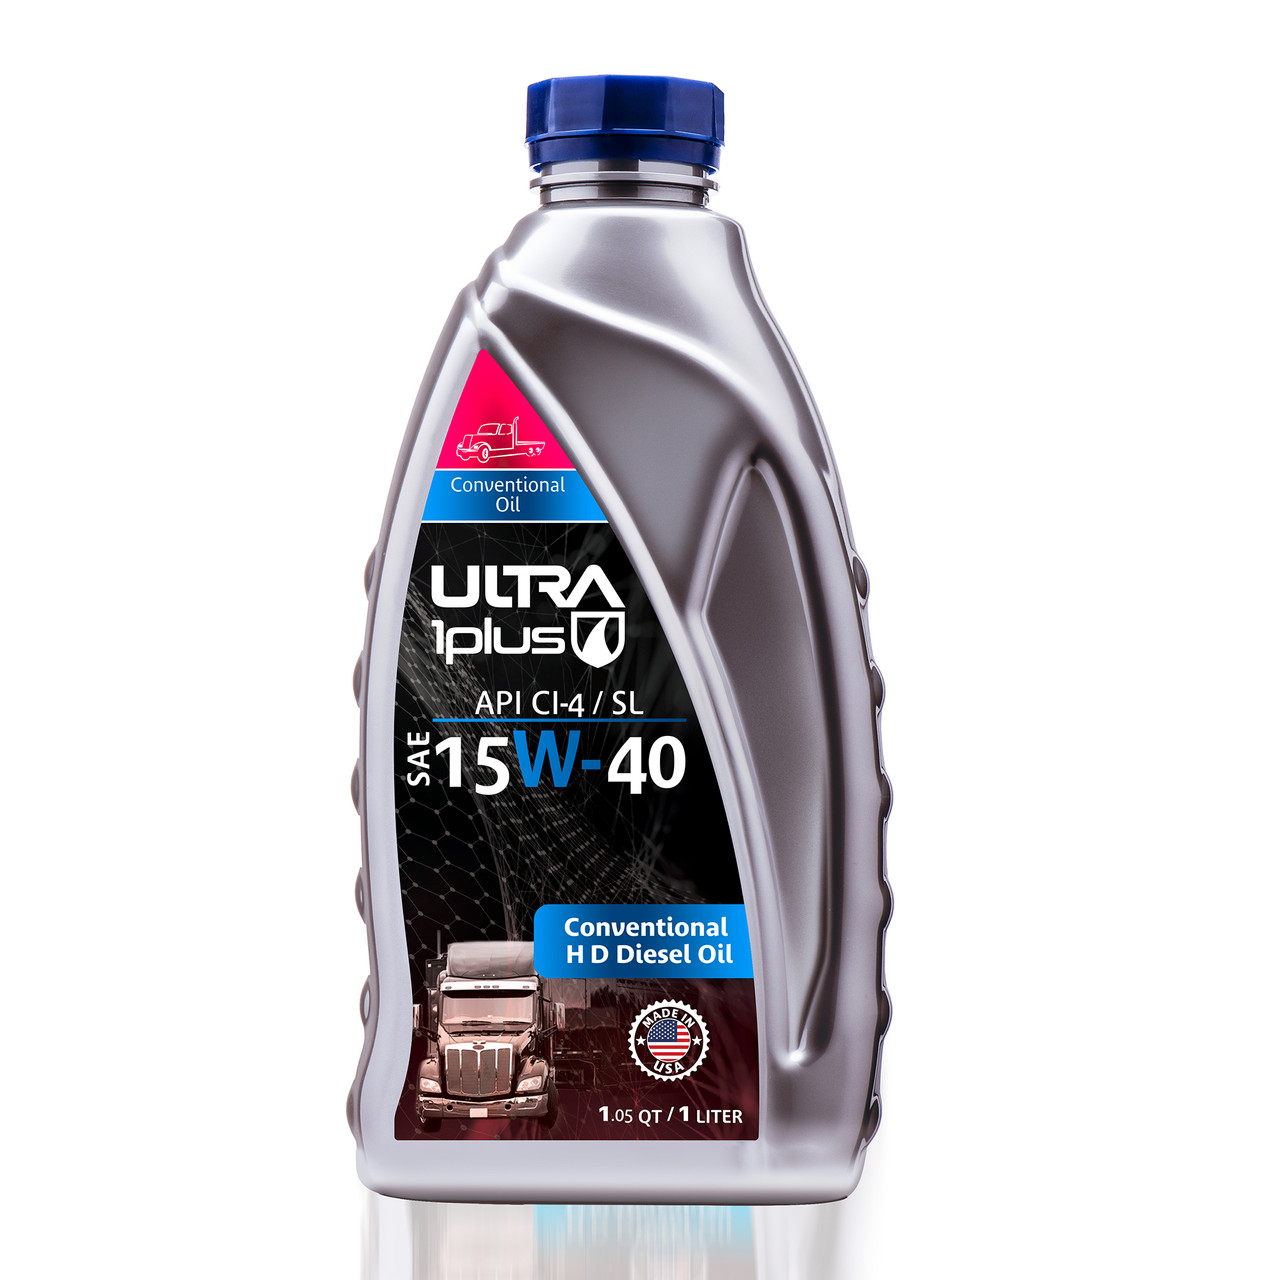 Ultra1Plus Conventional Heavy-Duty Motor Oil, API CI-4/SL